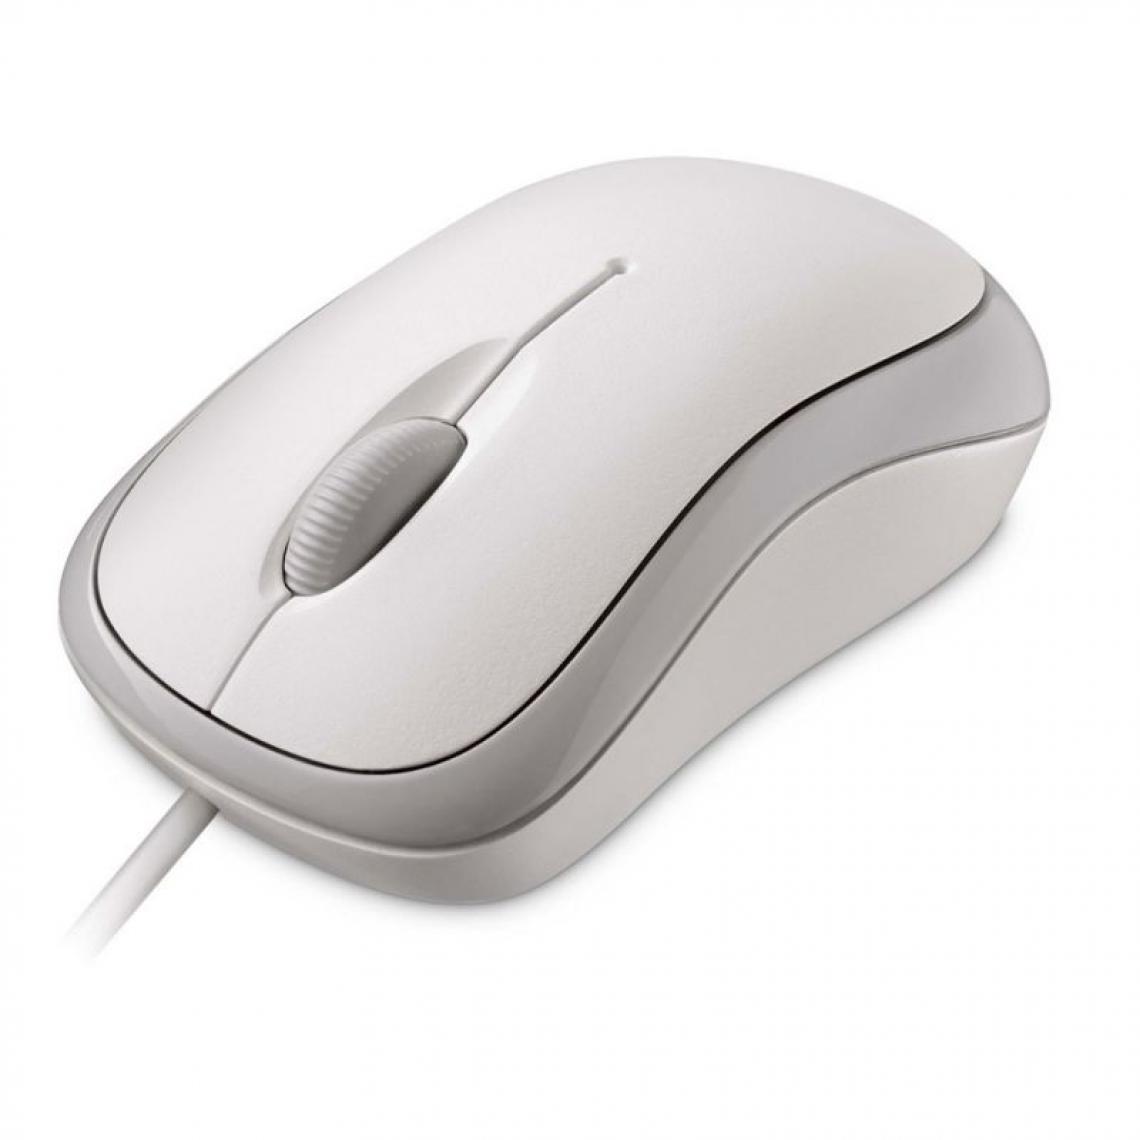 Microsoft - Microsoft - 4YH-00008 - Basic Optical Mouse for Business Souris optique 3 bouton(s) filaire USB blanc - Souris